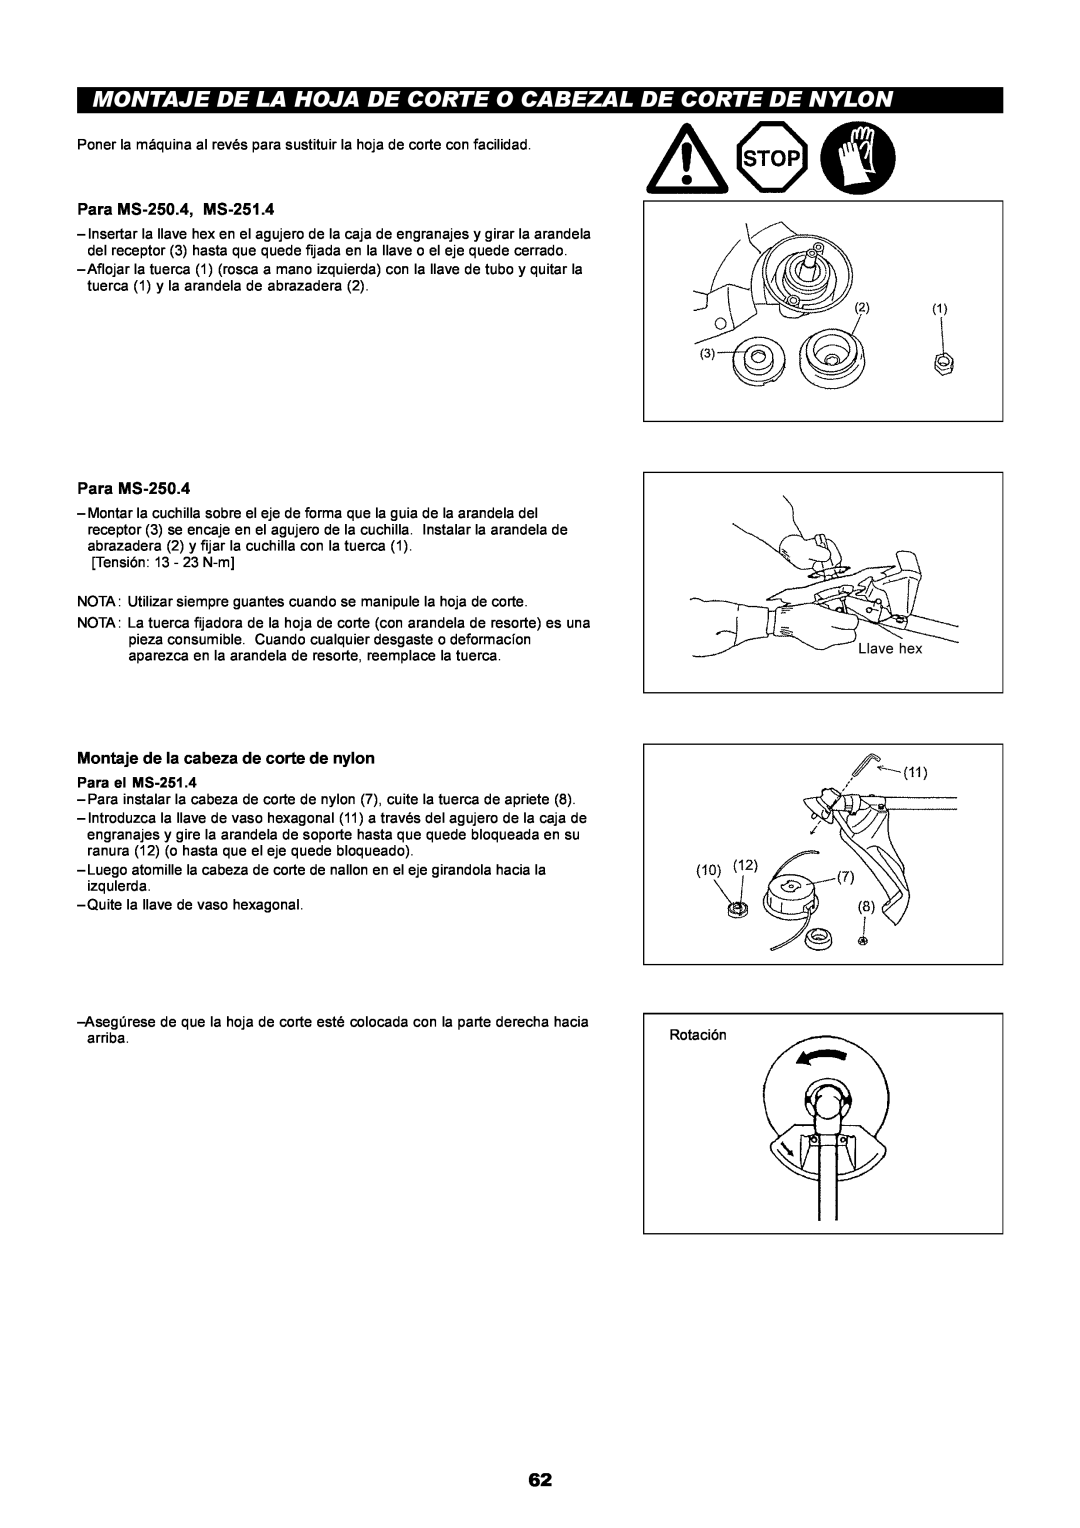 Dolmar instruction manual Montaje De La Hoja De Corte O Cabezal De Corte De Nylon, Para MS-250.4, MS-251.4 